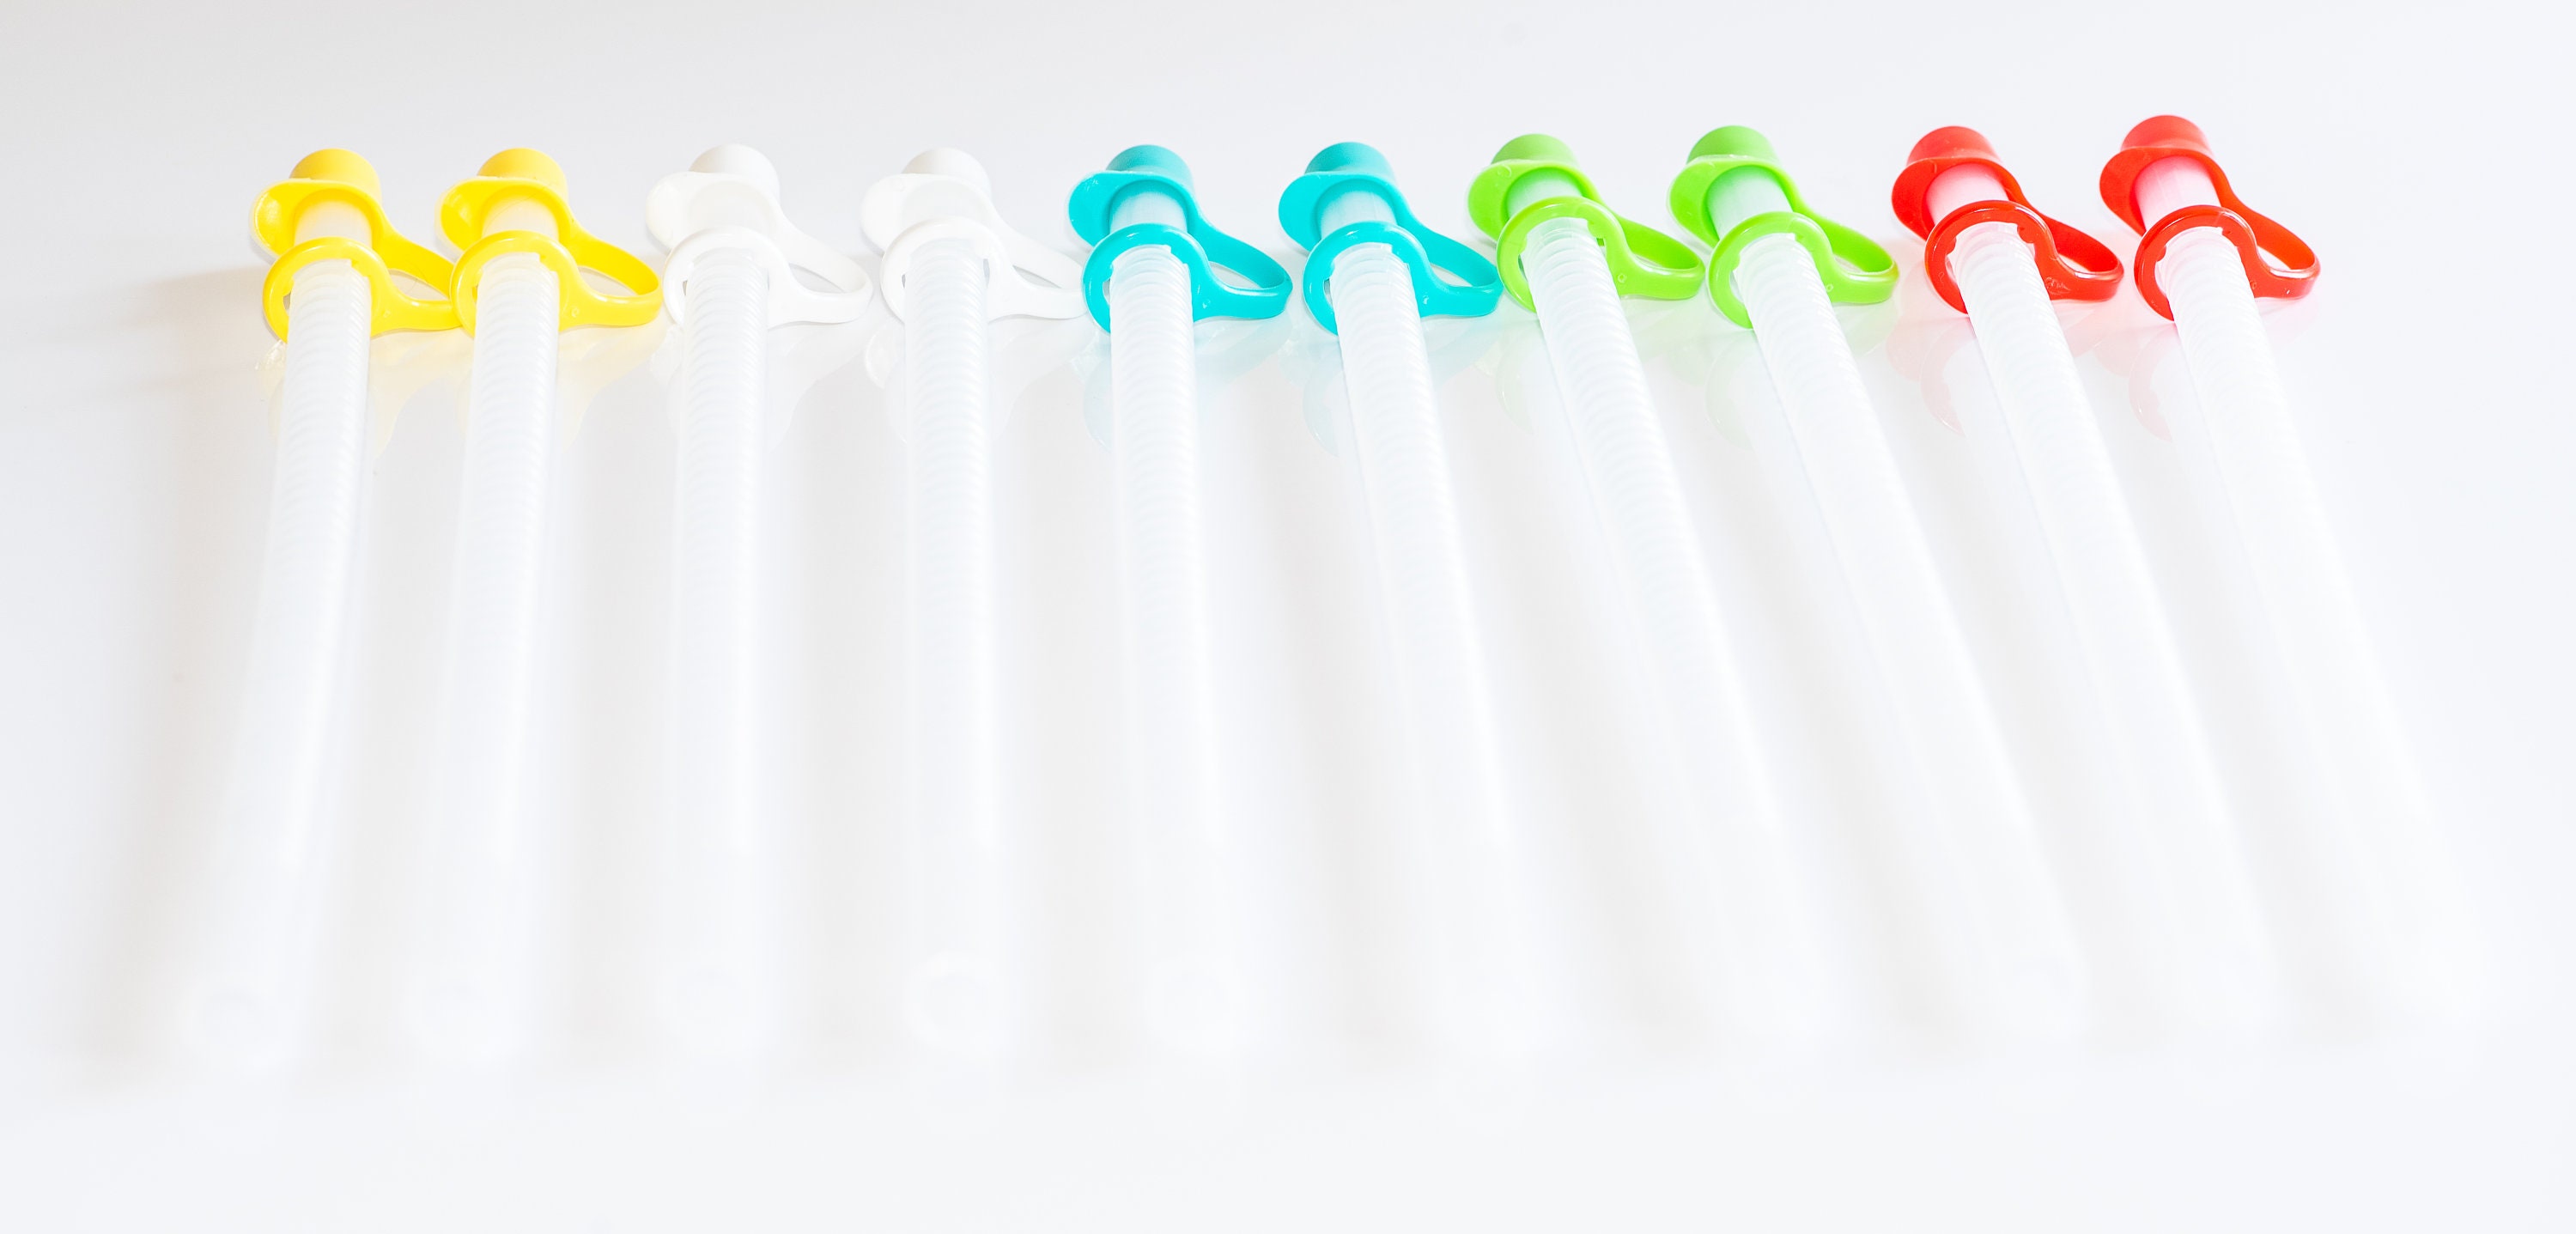 Reusable Plastic Straws 13 inch - Bendy Straws Drinking Plastic